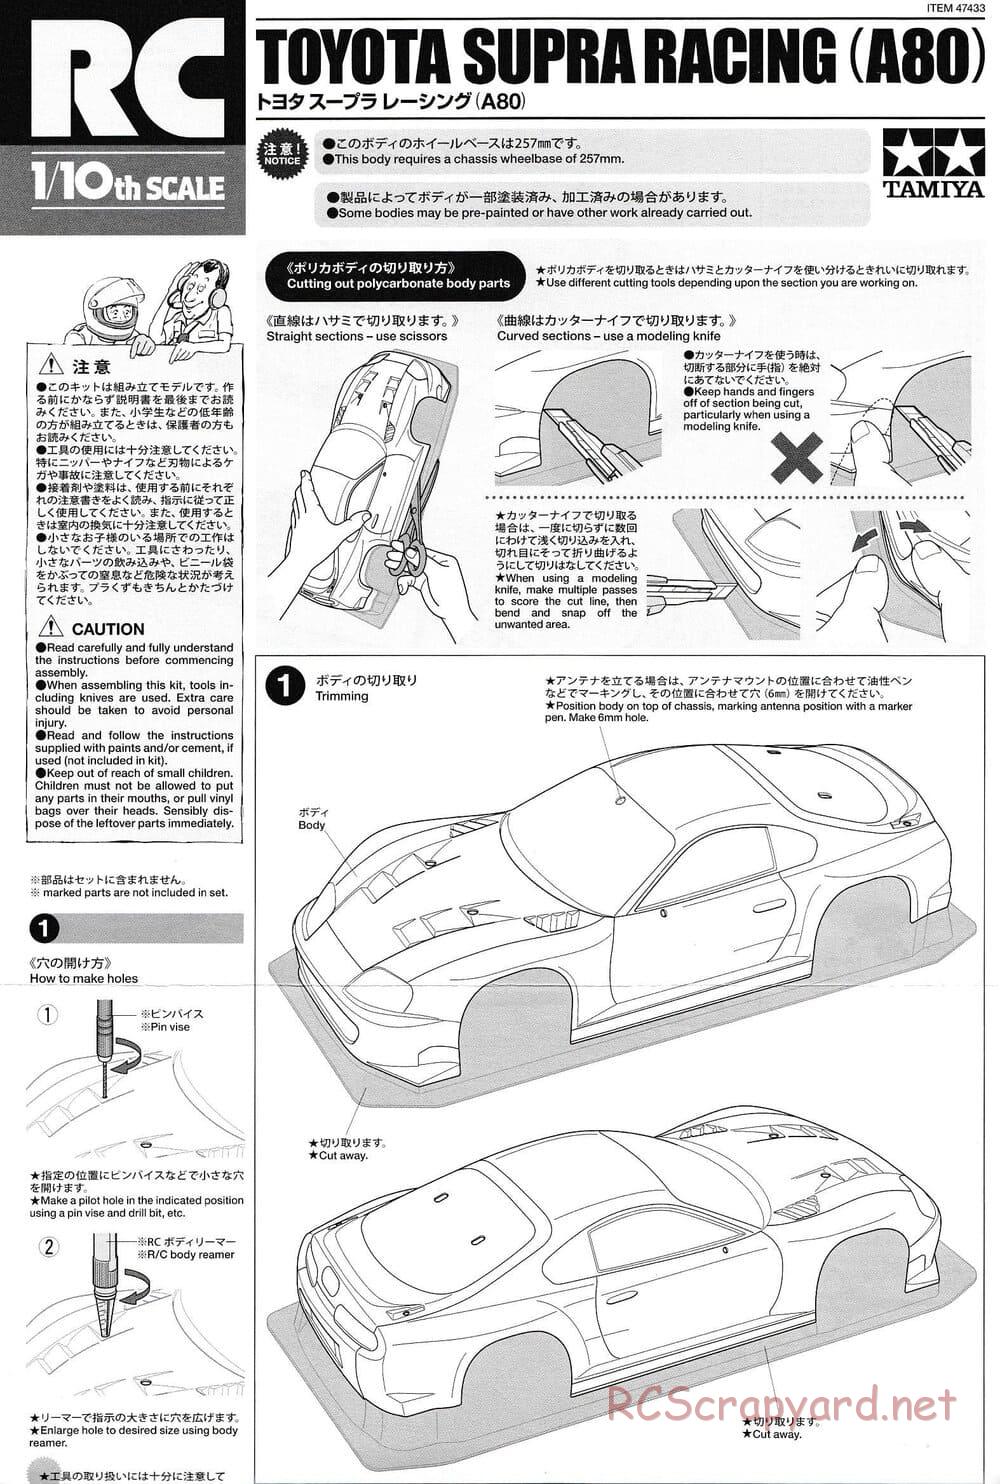 Tamiya - Toyota Supra Racing (A80) - TT-02 Chassis - Body Manual - Page 1